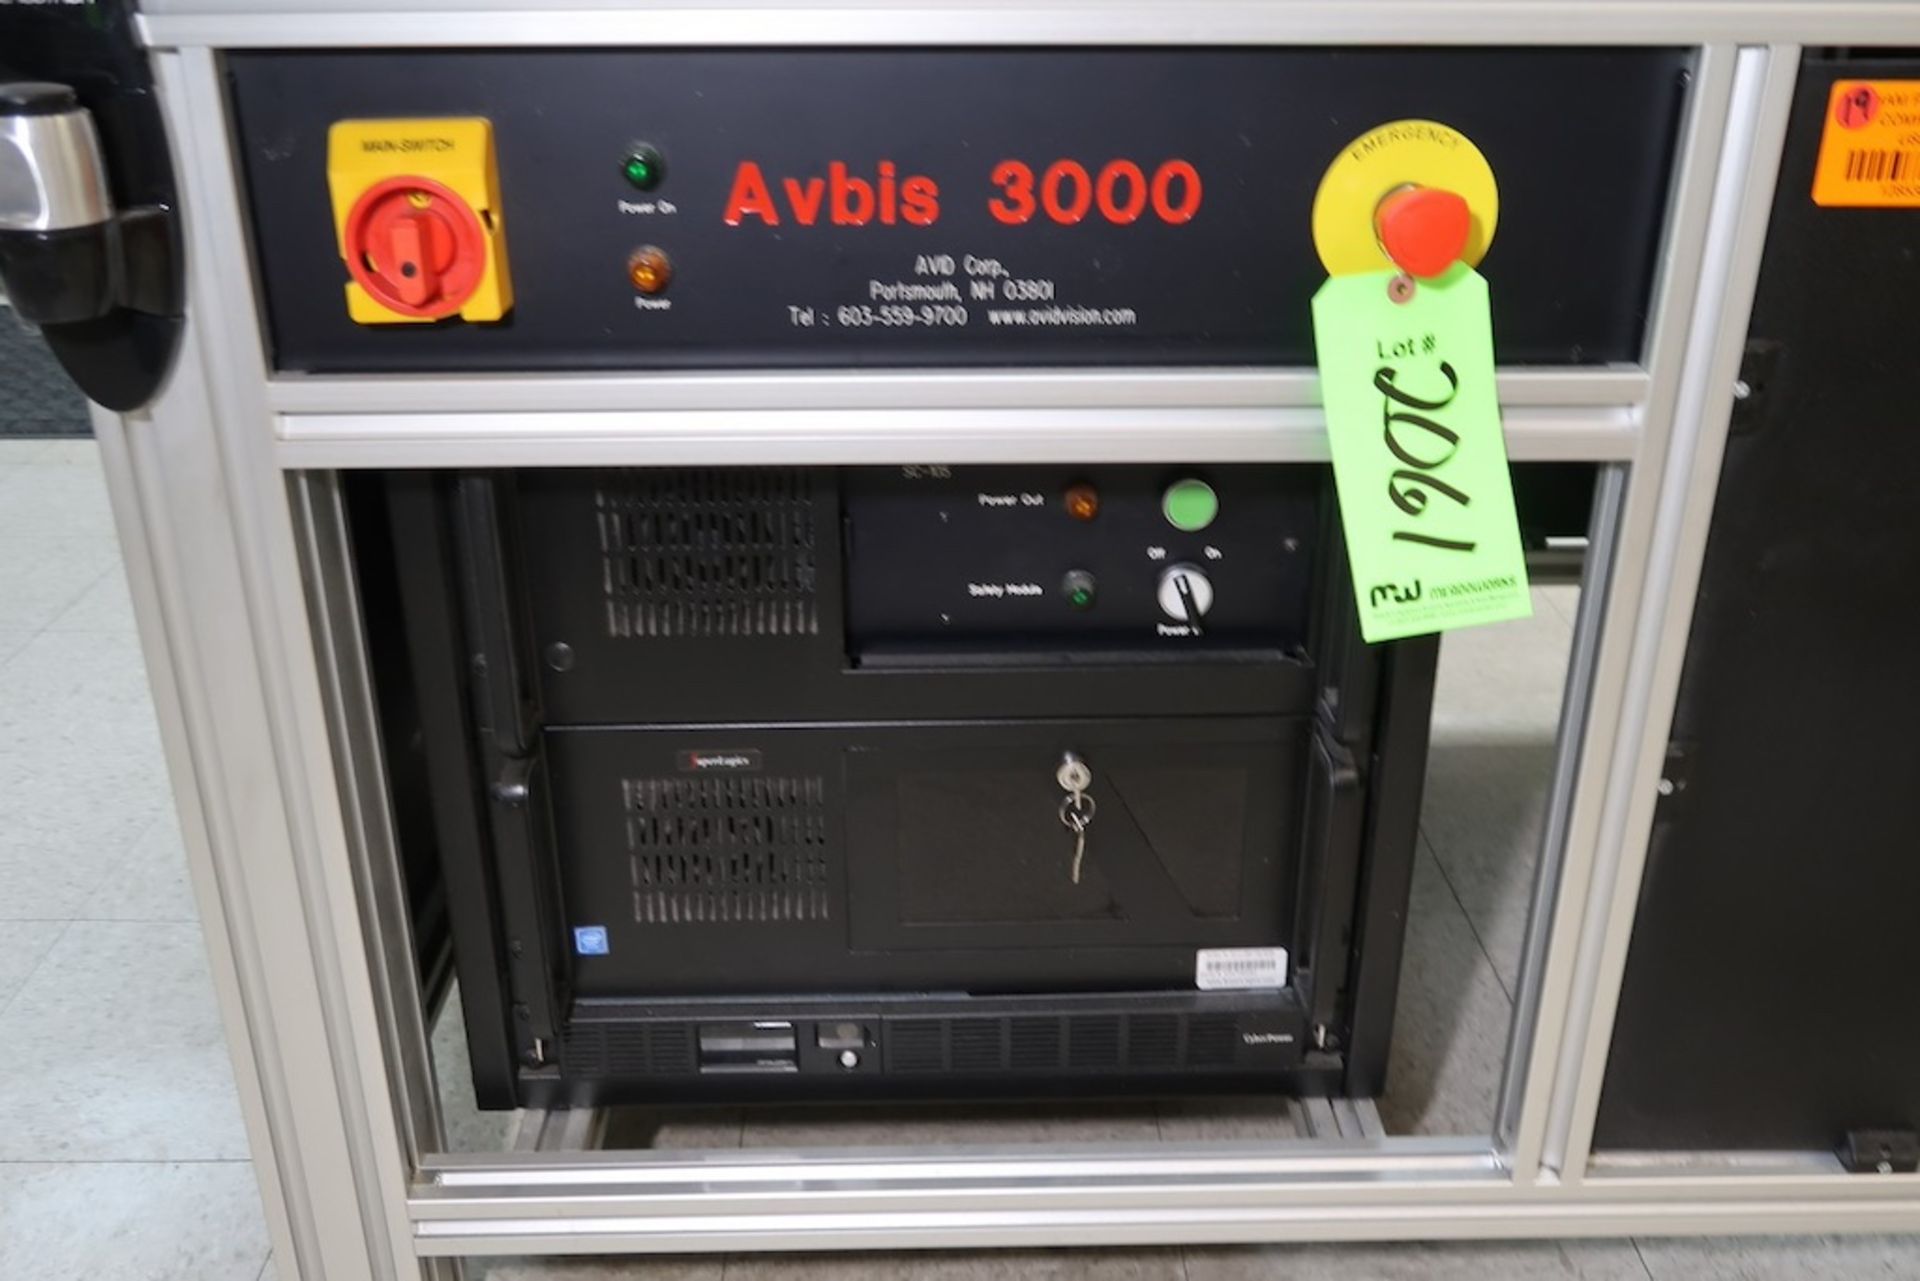 Avid Corp Avbis 3000 Automated Bottle Measurement Inspection System - Image 8 of 9